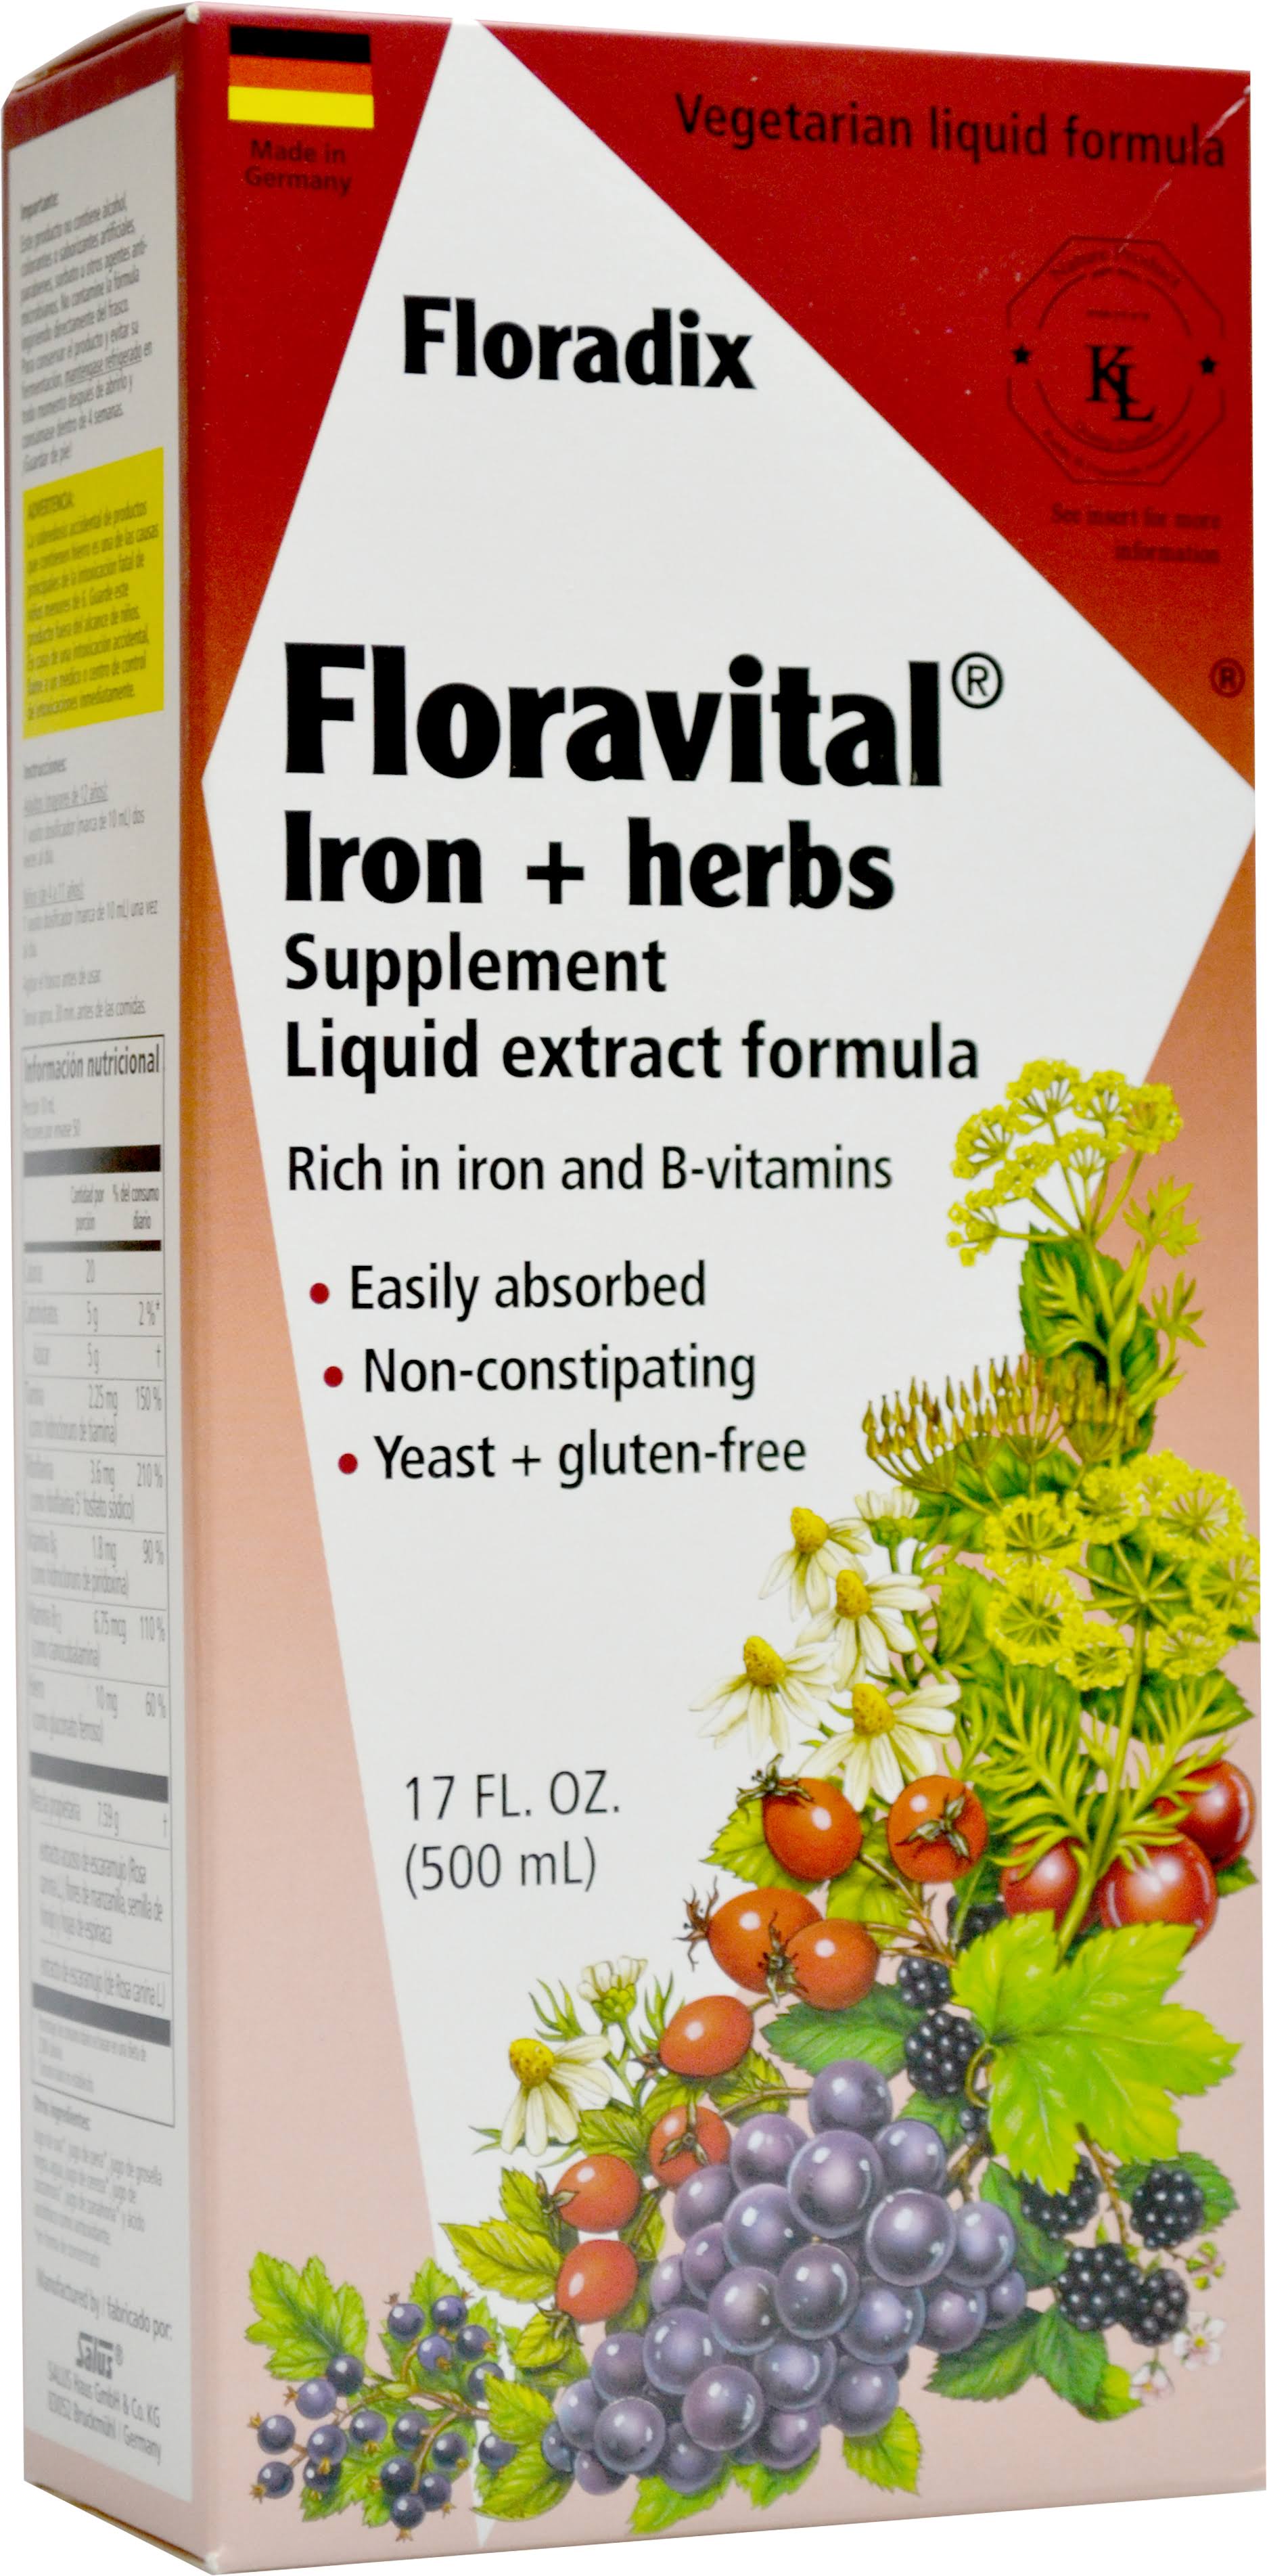 Floradix Floravital Iron and Herbs Supplement - 500ml